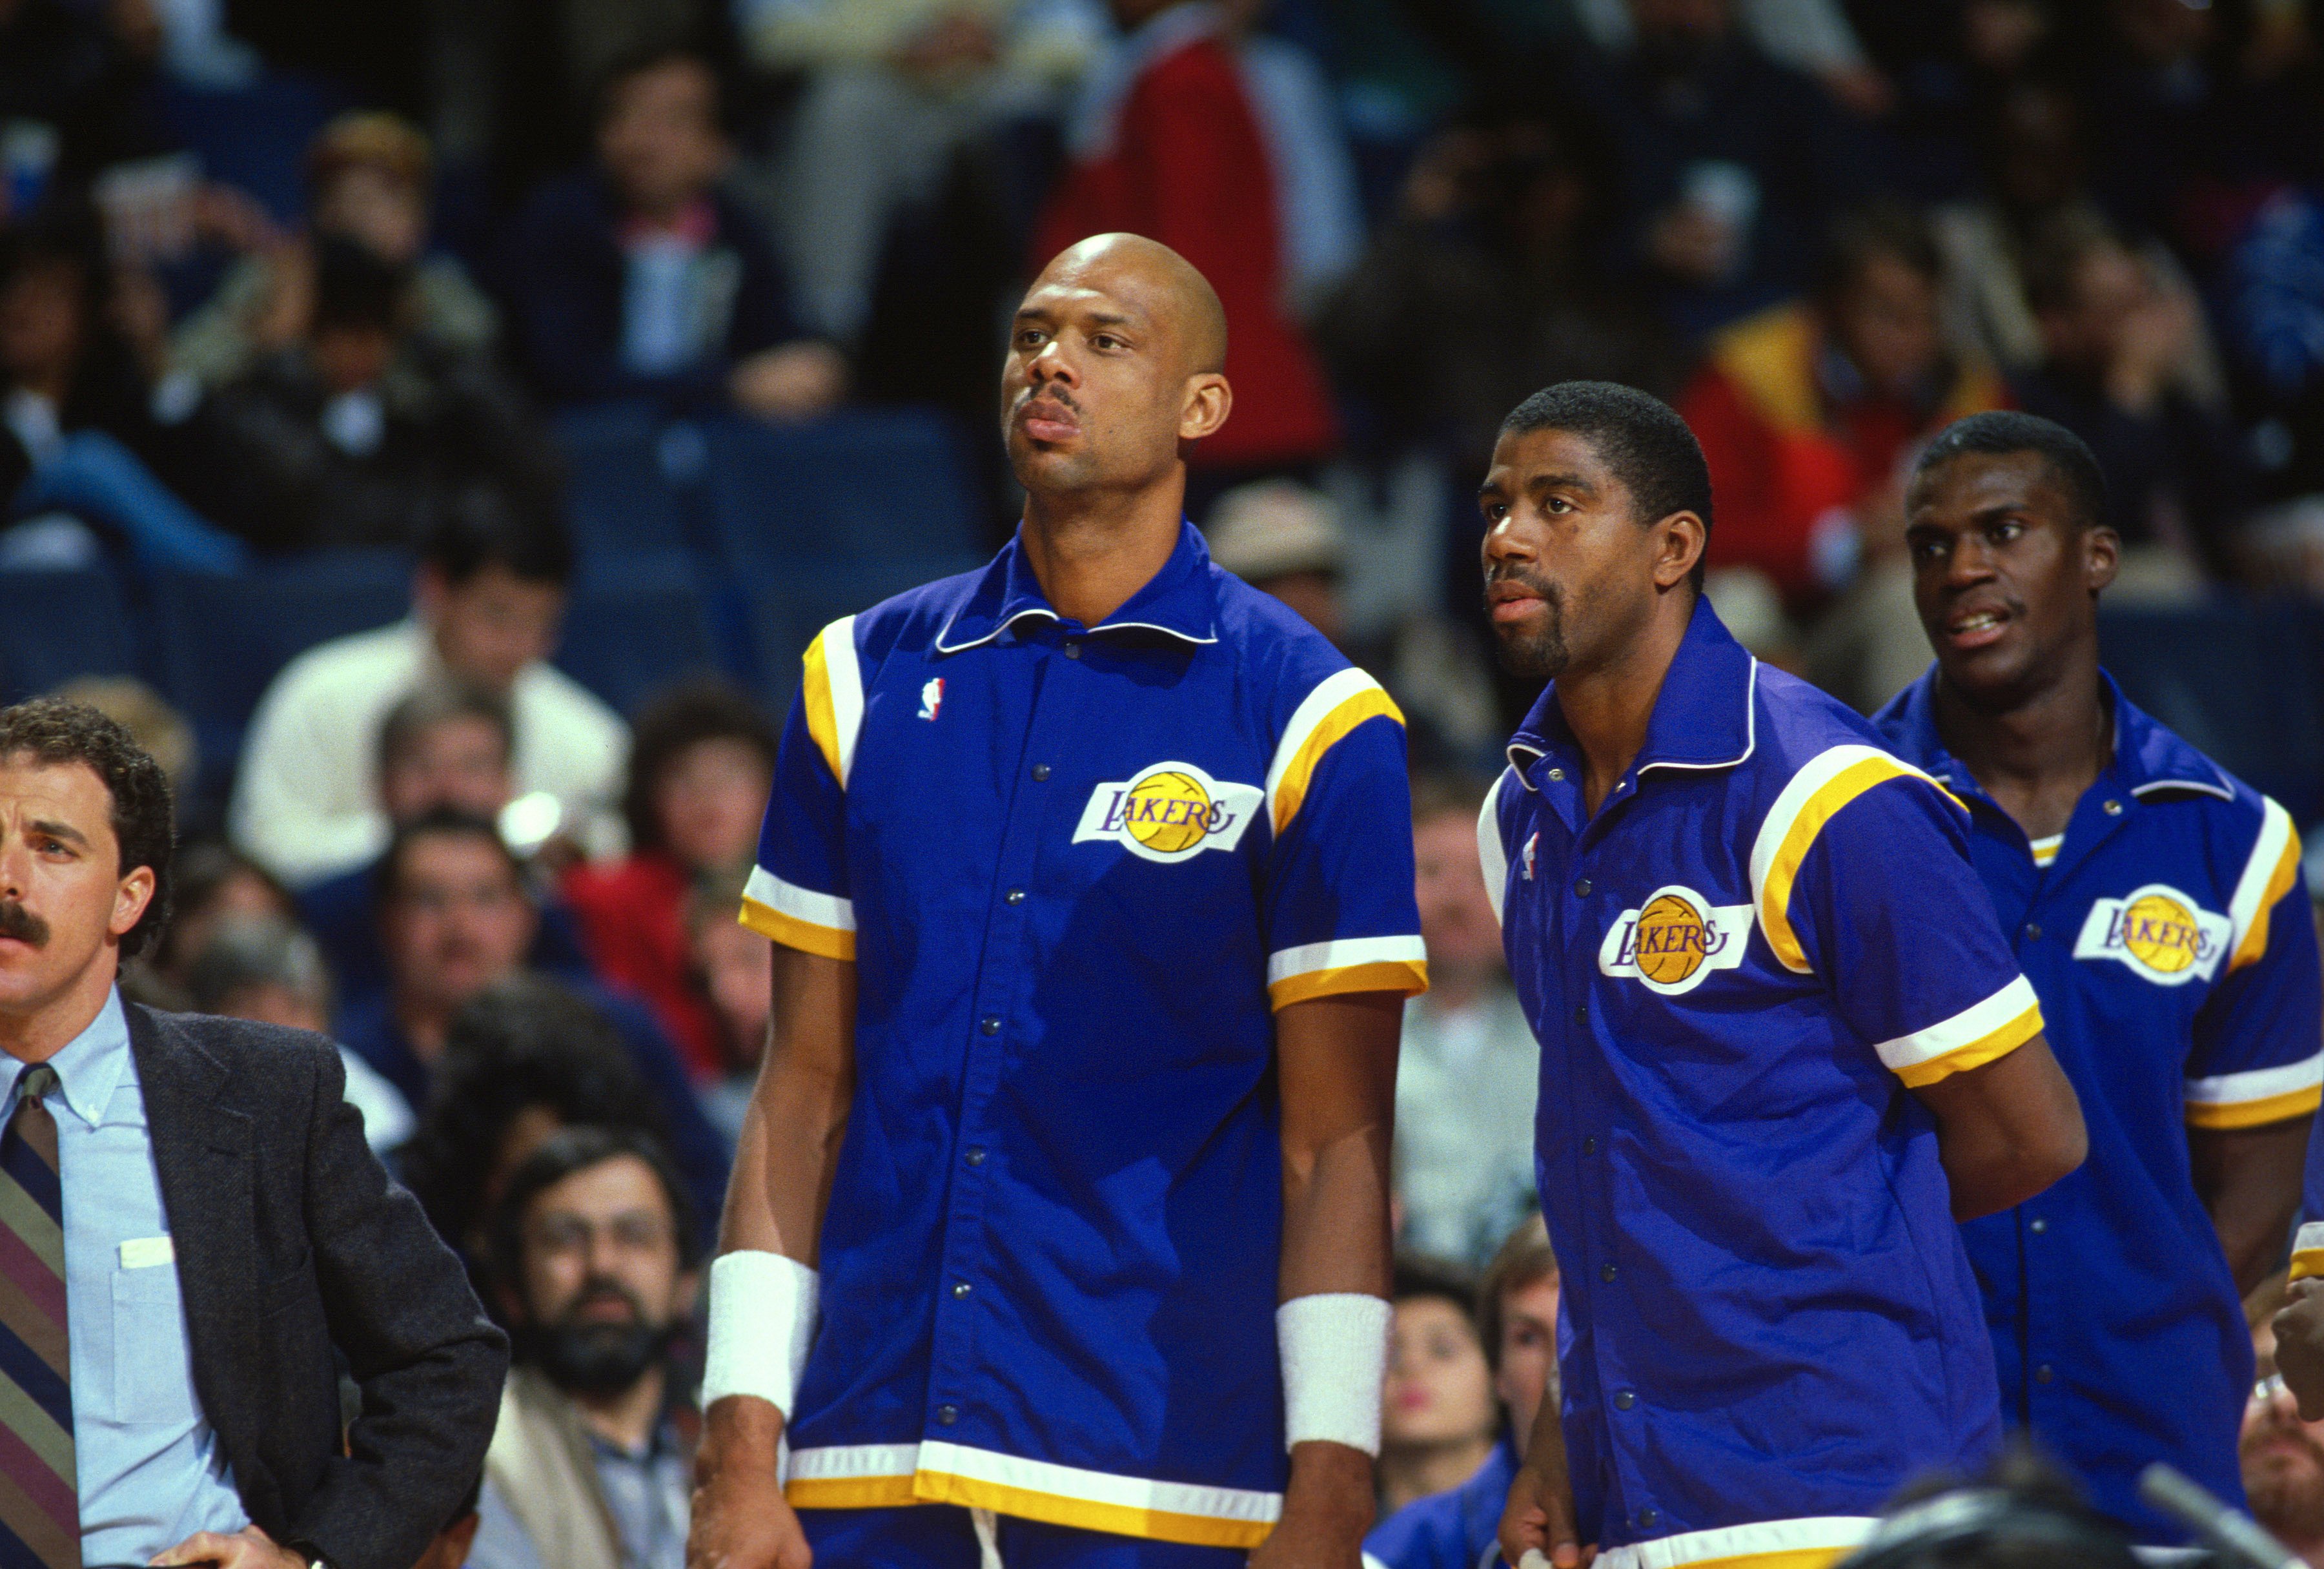 Kareem Abdul-Jabbar, Magic Johnson, and Orlando Woolridge standing next to each other during a 1988 basketball game against Washington Bullets